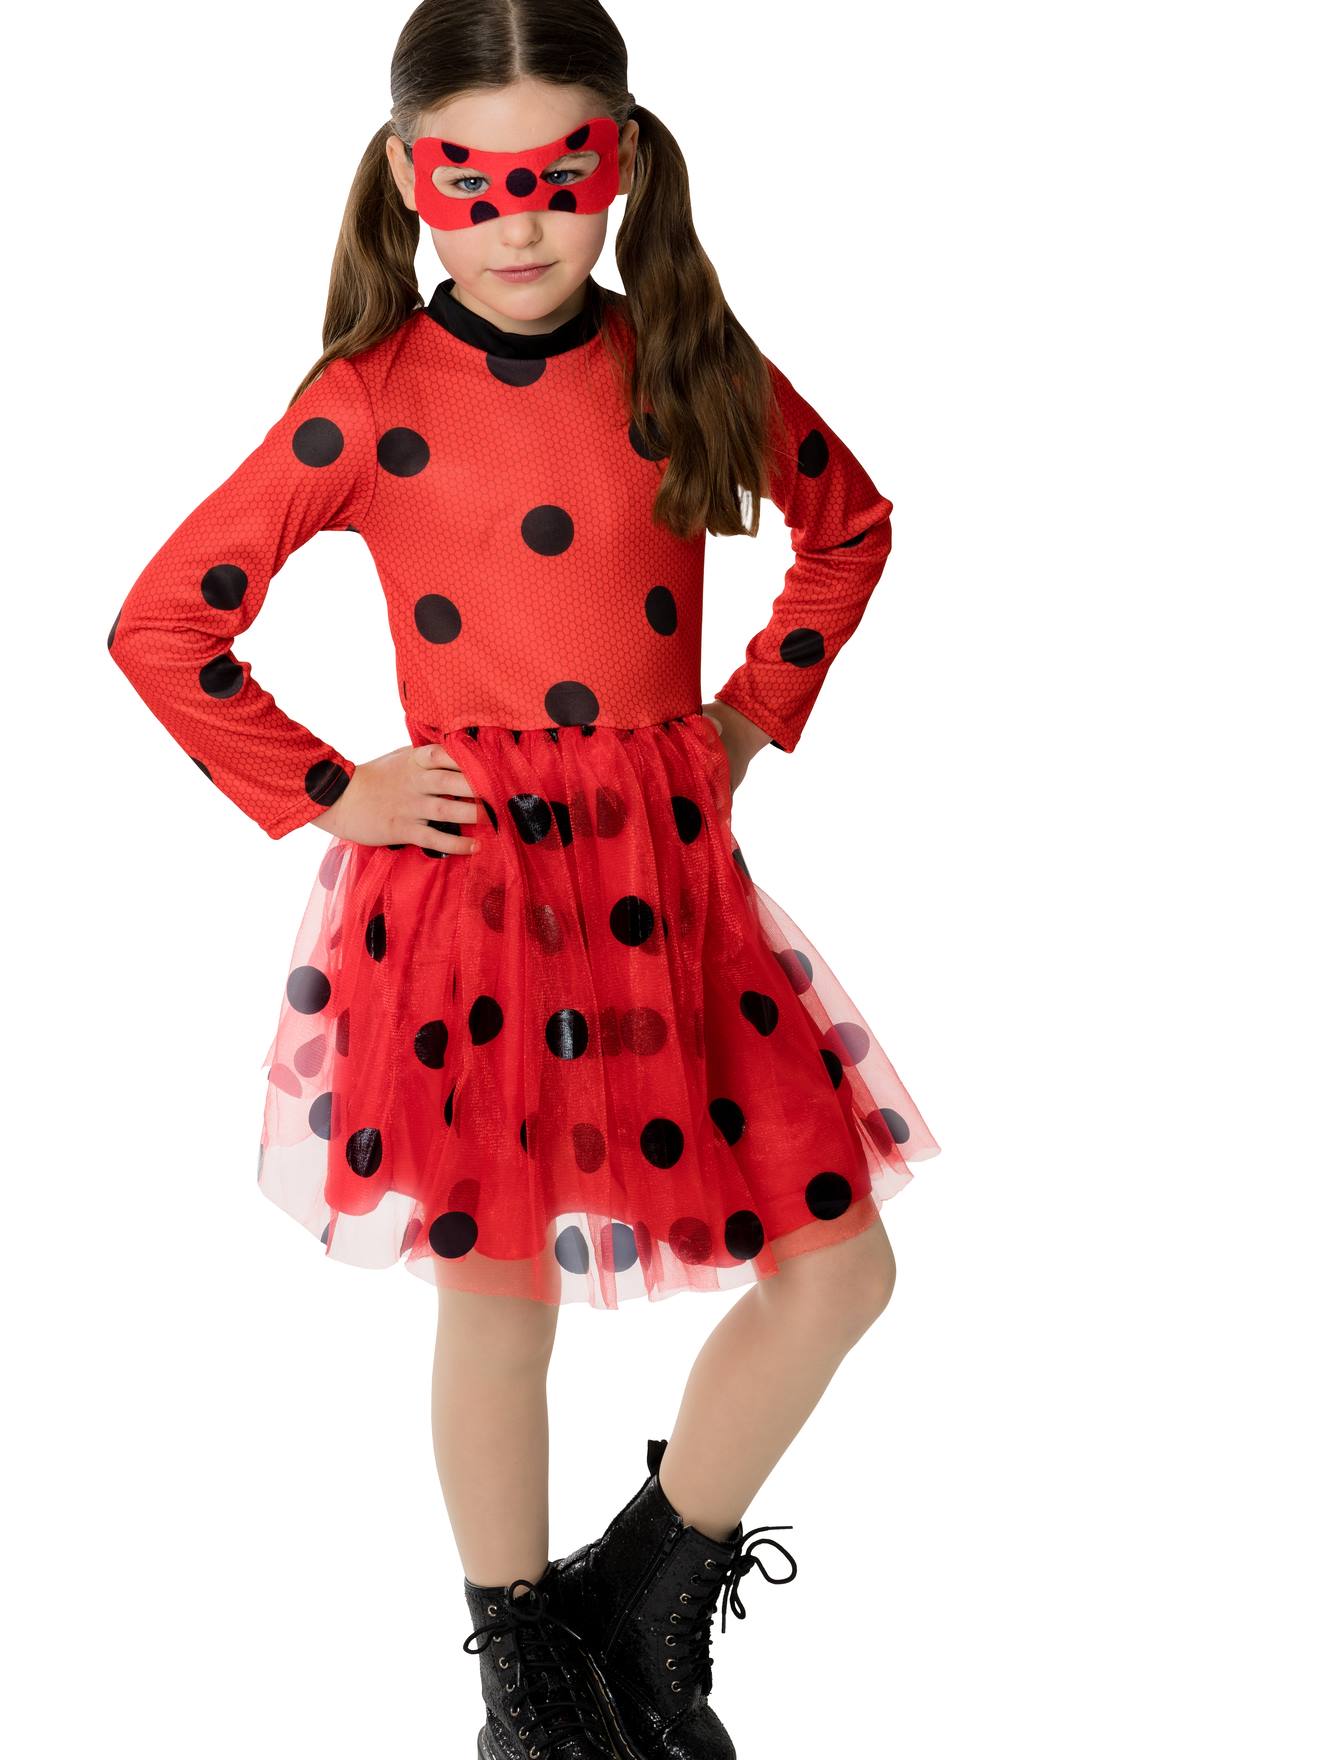 robe tutu ladybug - taille unique (5-8 ans) - miraculous - rubie's rouge